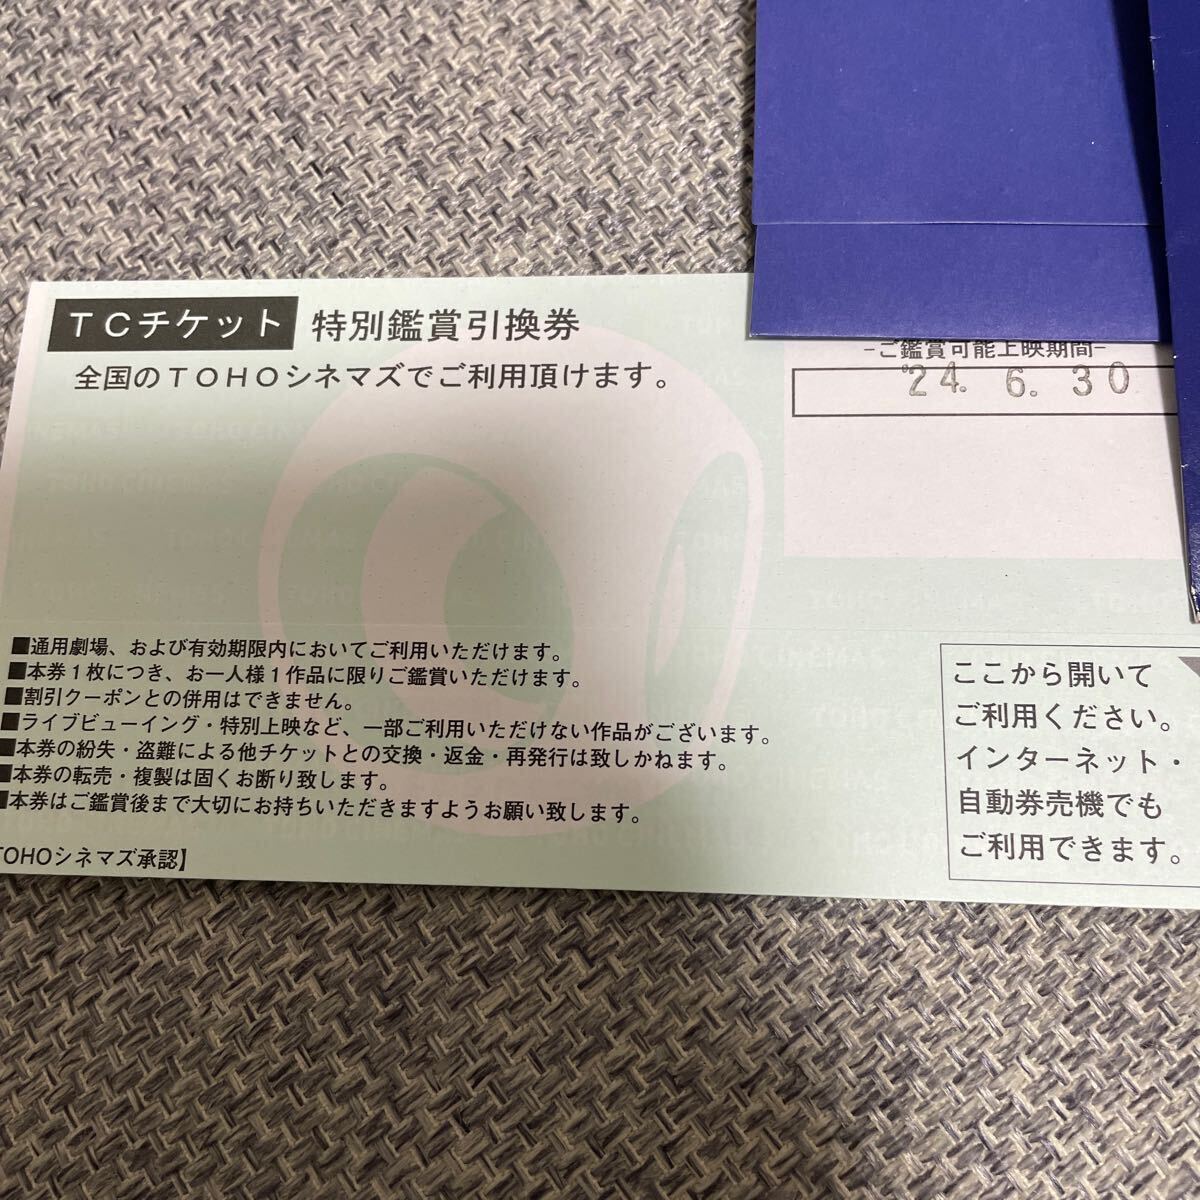 TOHOsinemazTC ticket adult 1 sheets 